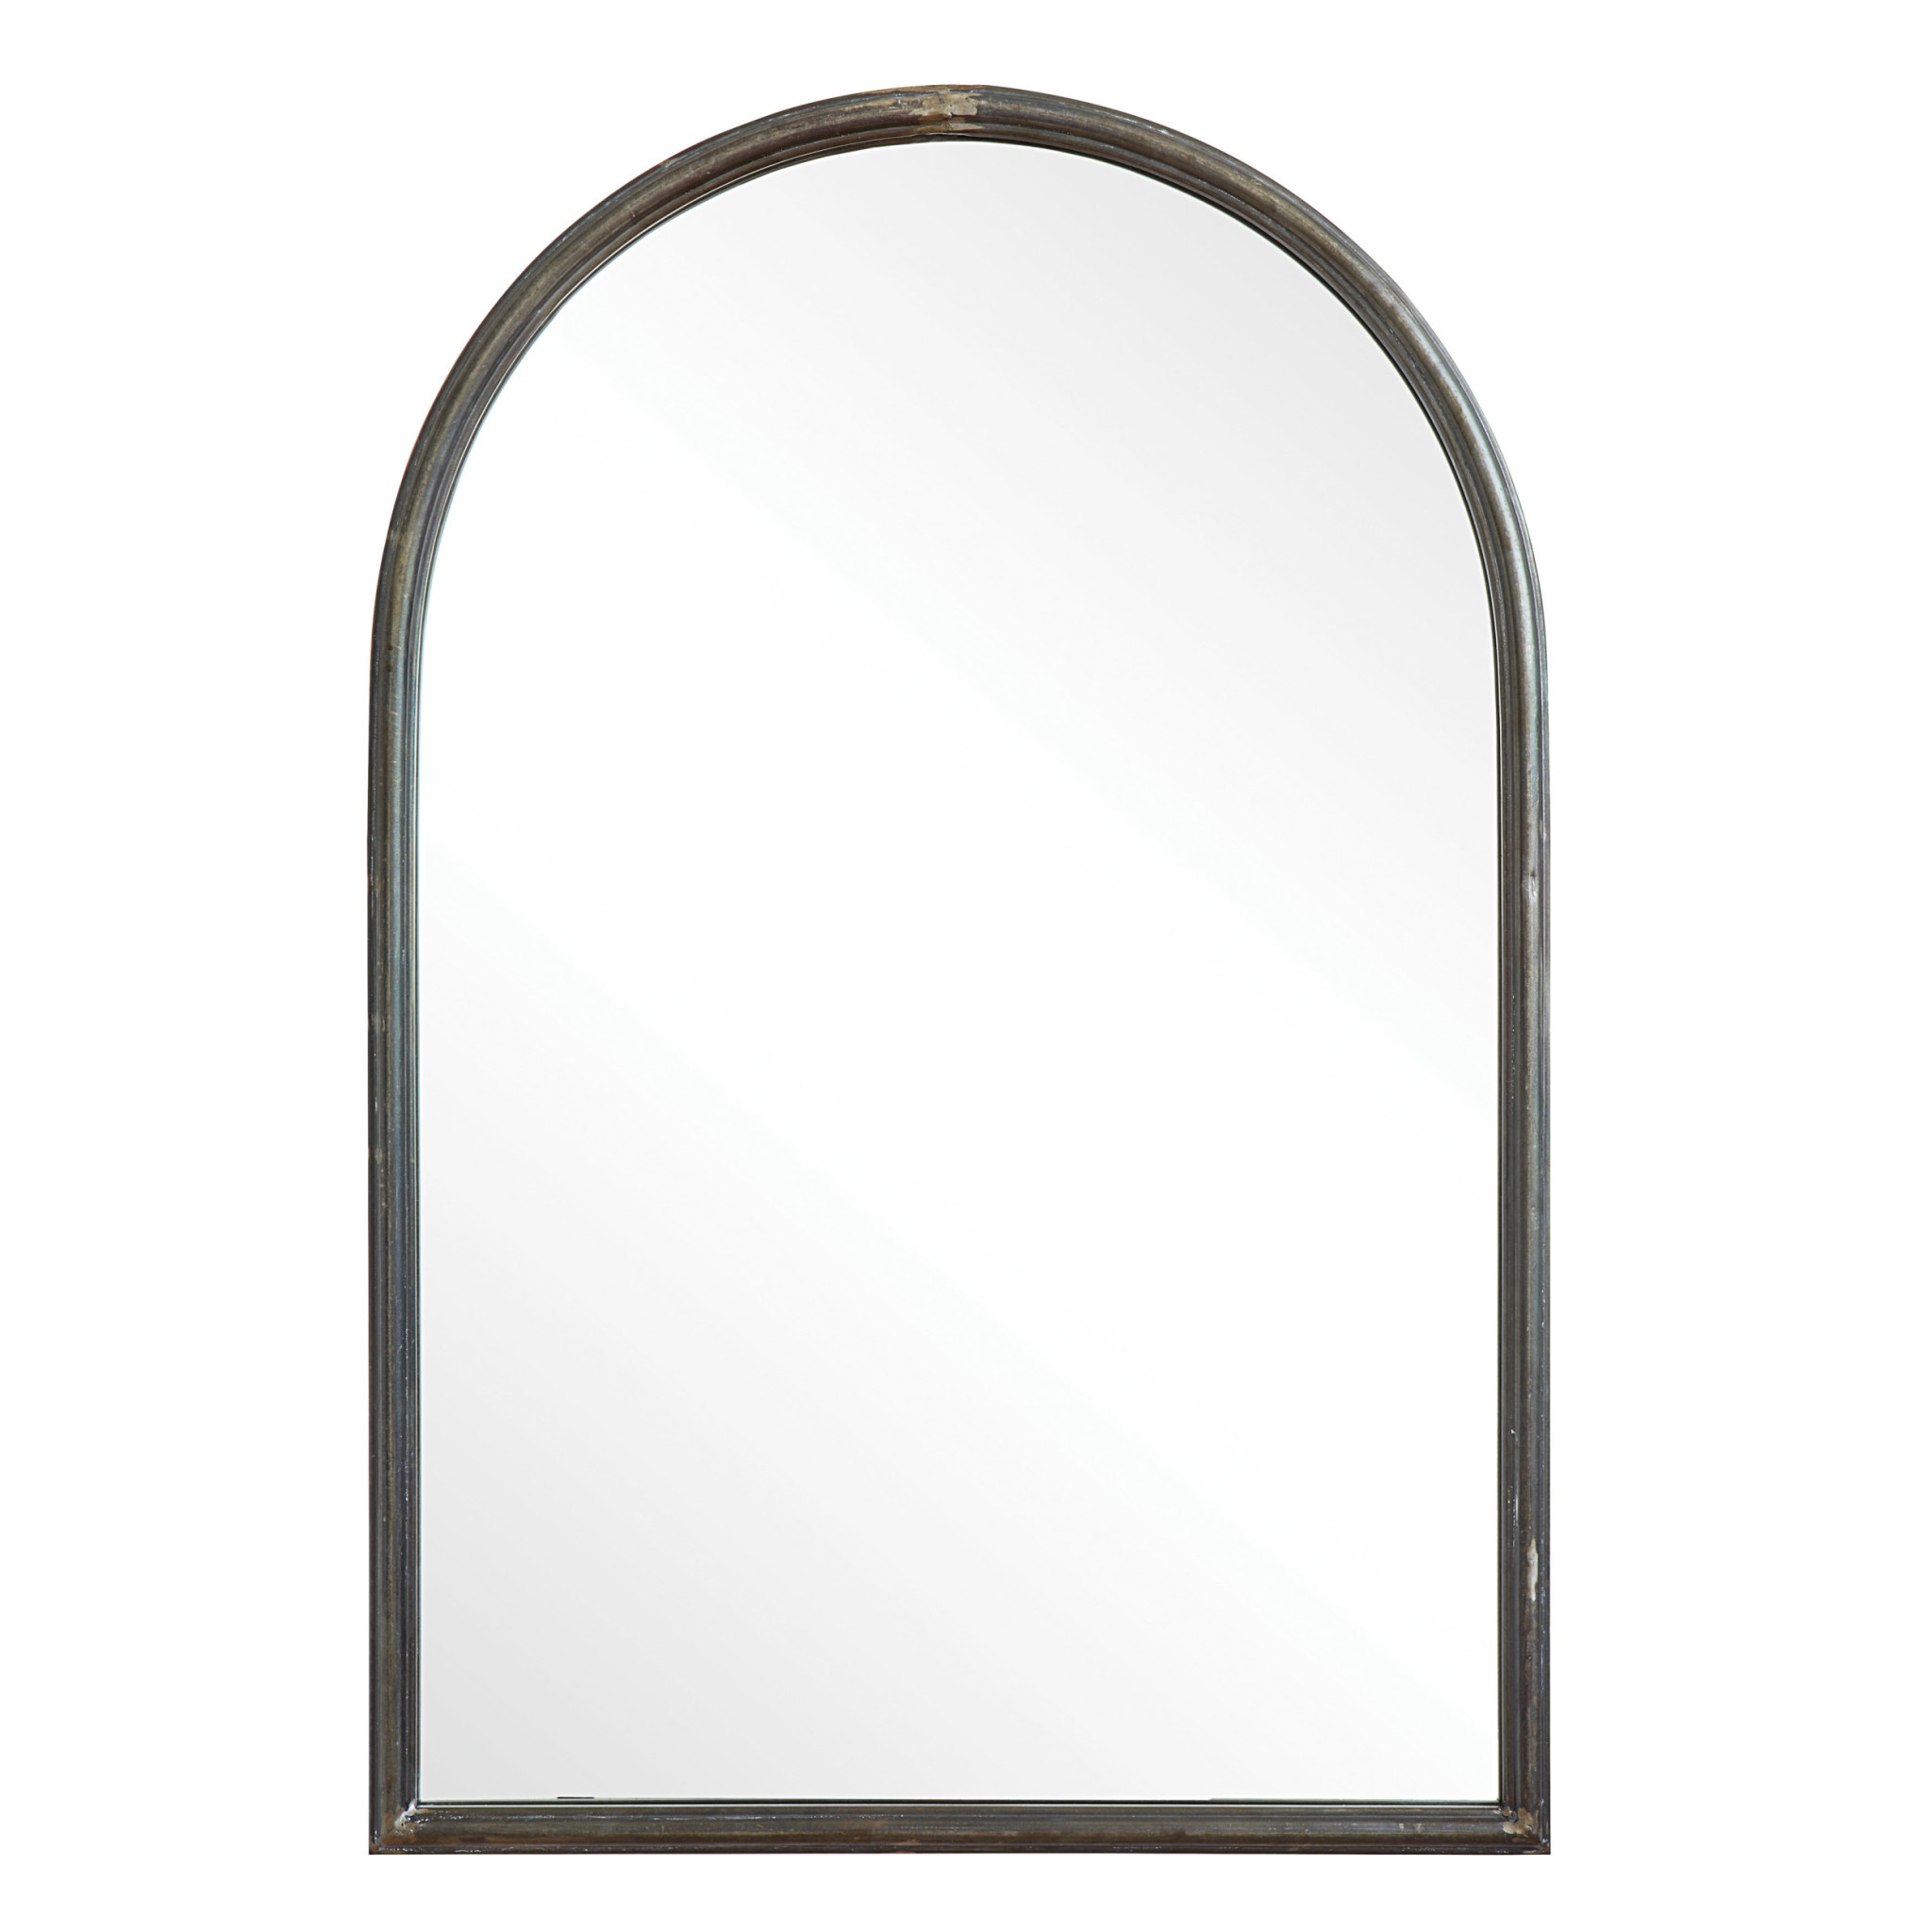 Arched Metal Framed Wall Mirror, Black 24"x36"